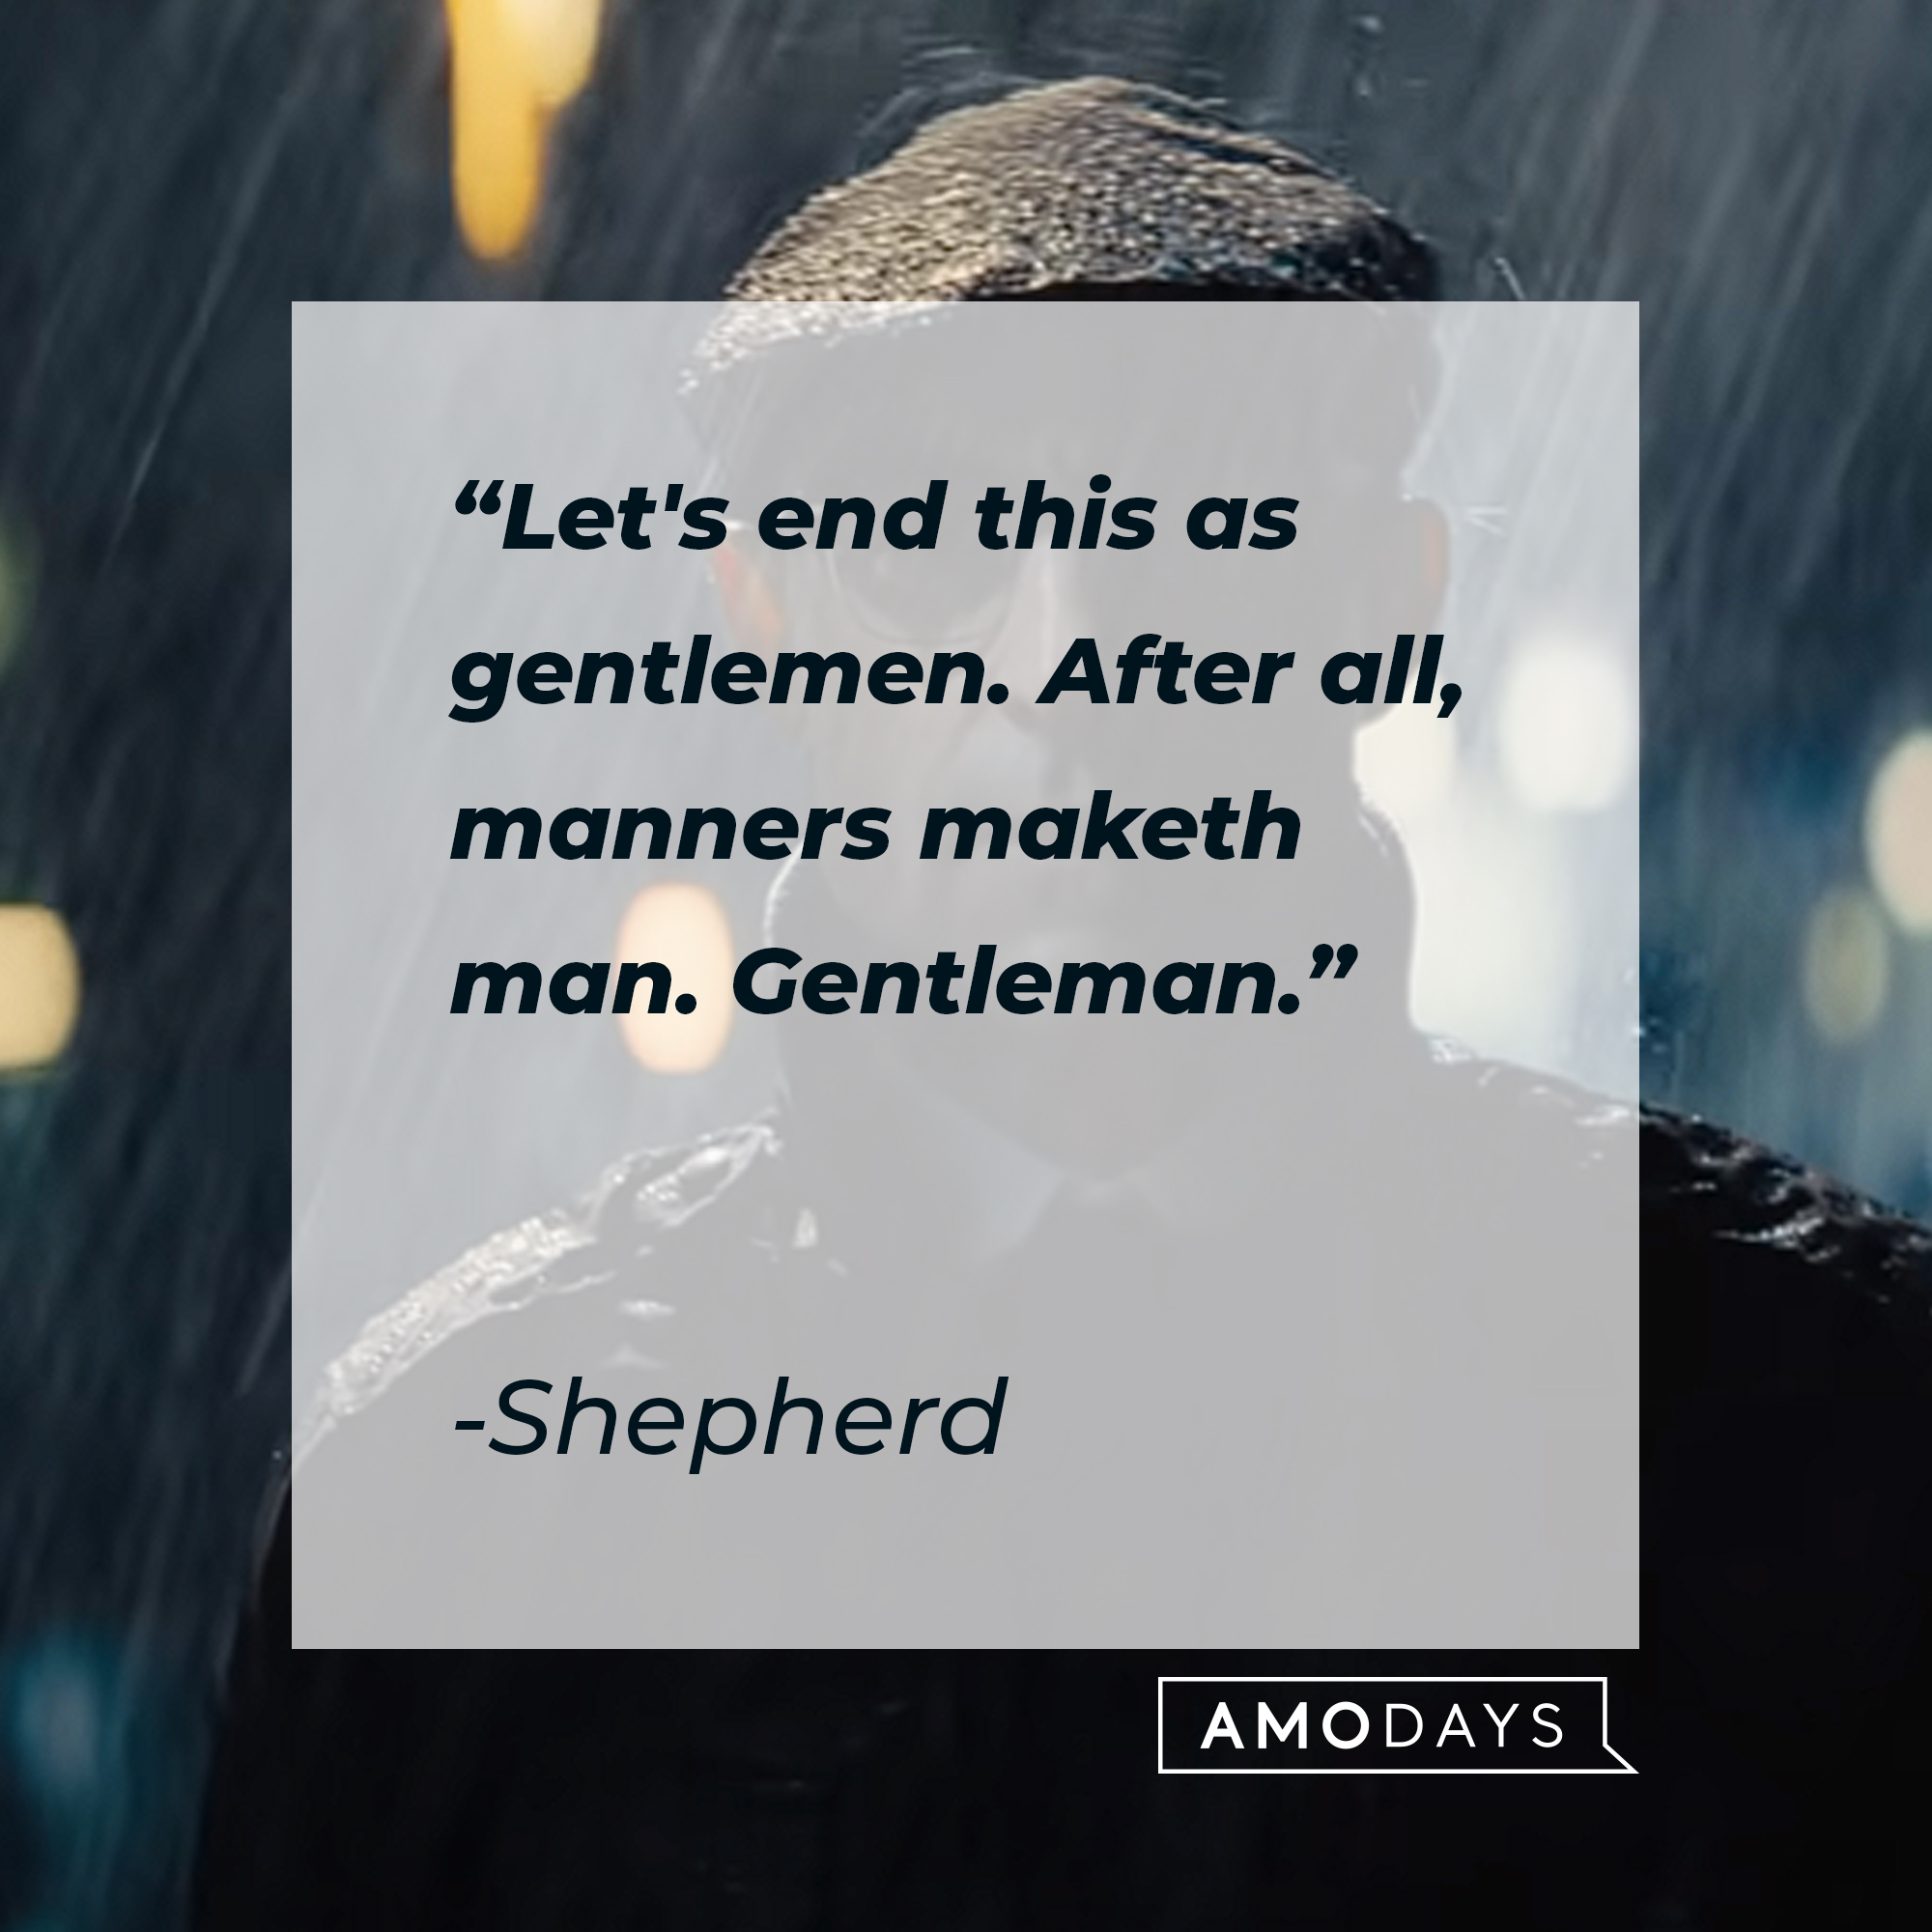 Shepherd's quote: "Let's end this as gentlemen. After all, manners maketh man. Gentleman." | Image: YouTube / 20thCenturyStudios